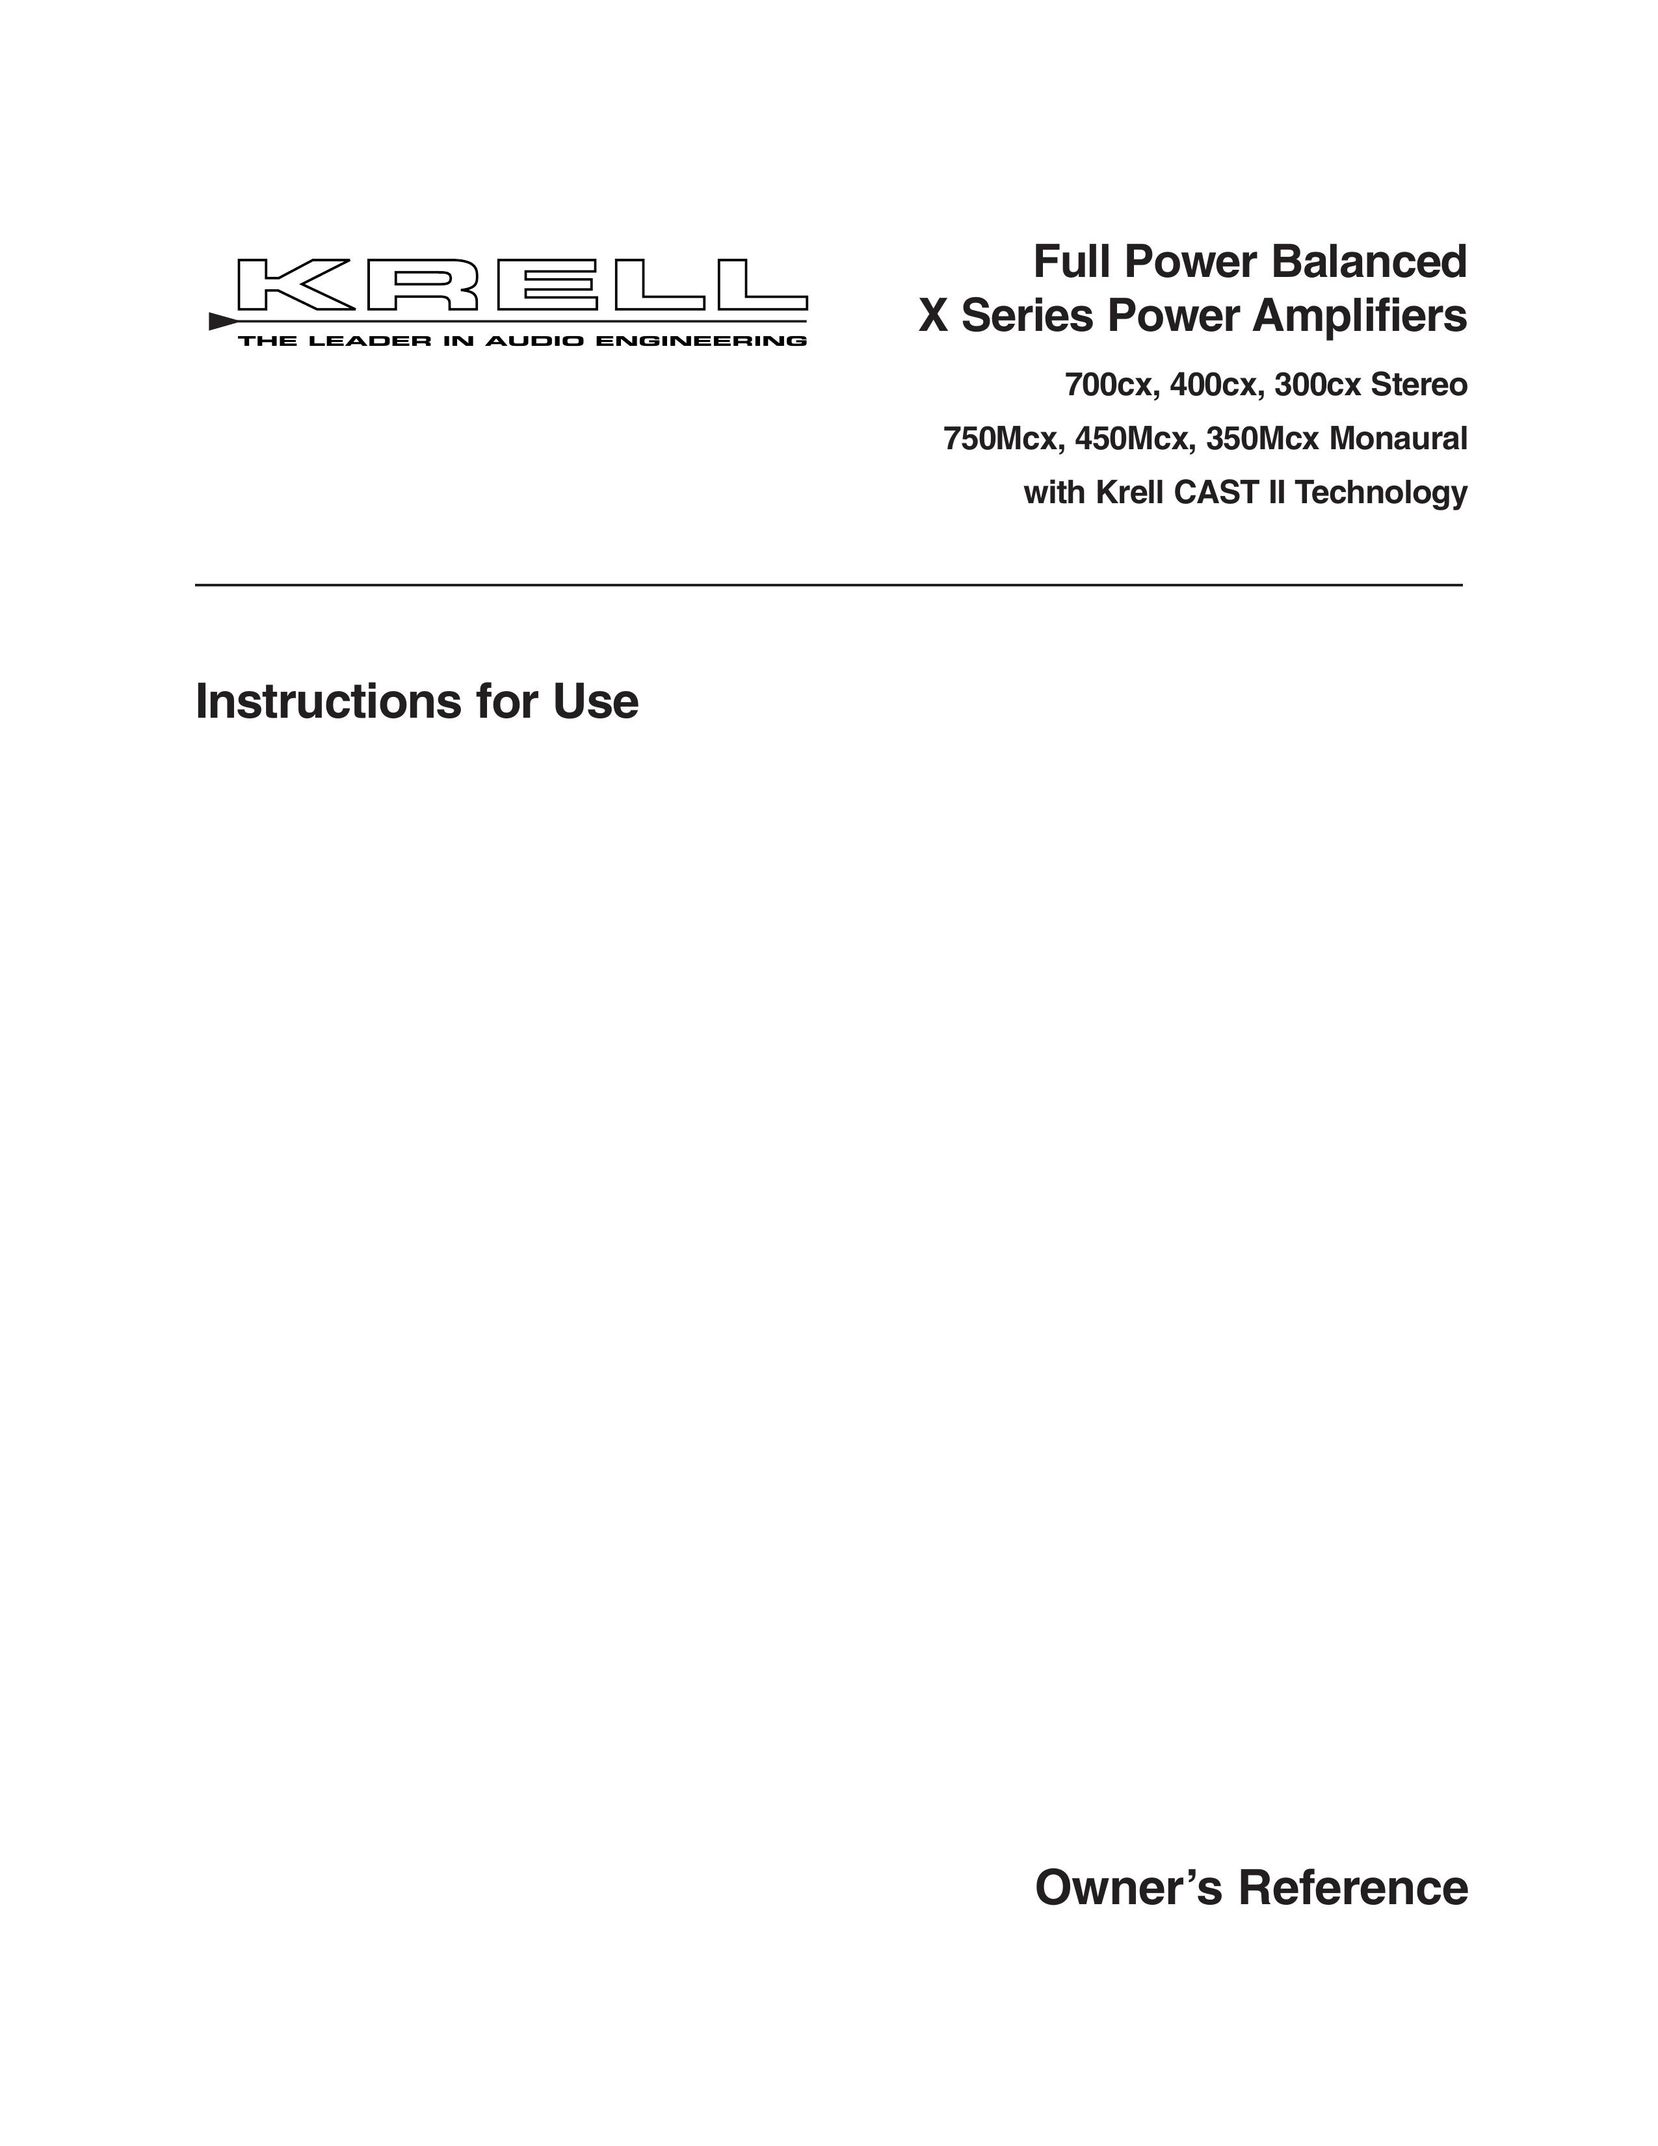 Krell Industries 350Mcx Stereo Amplifier User Manual